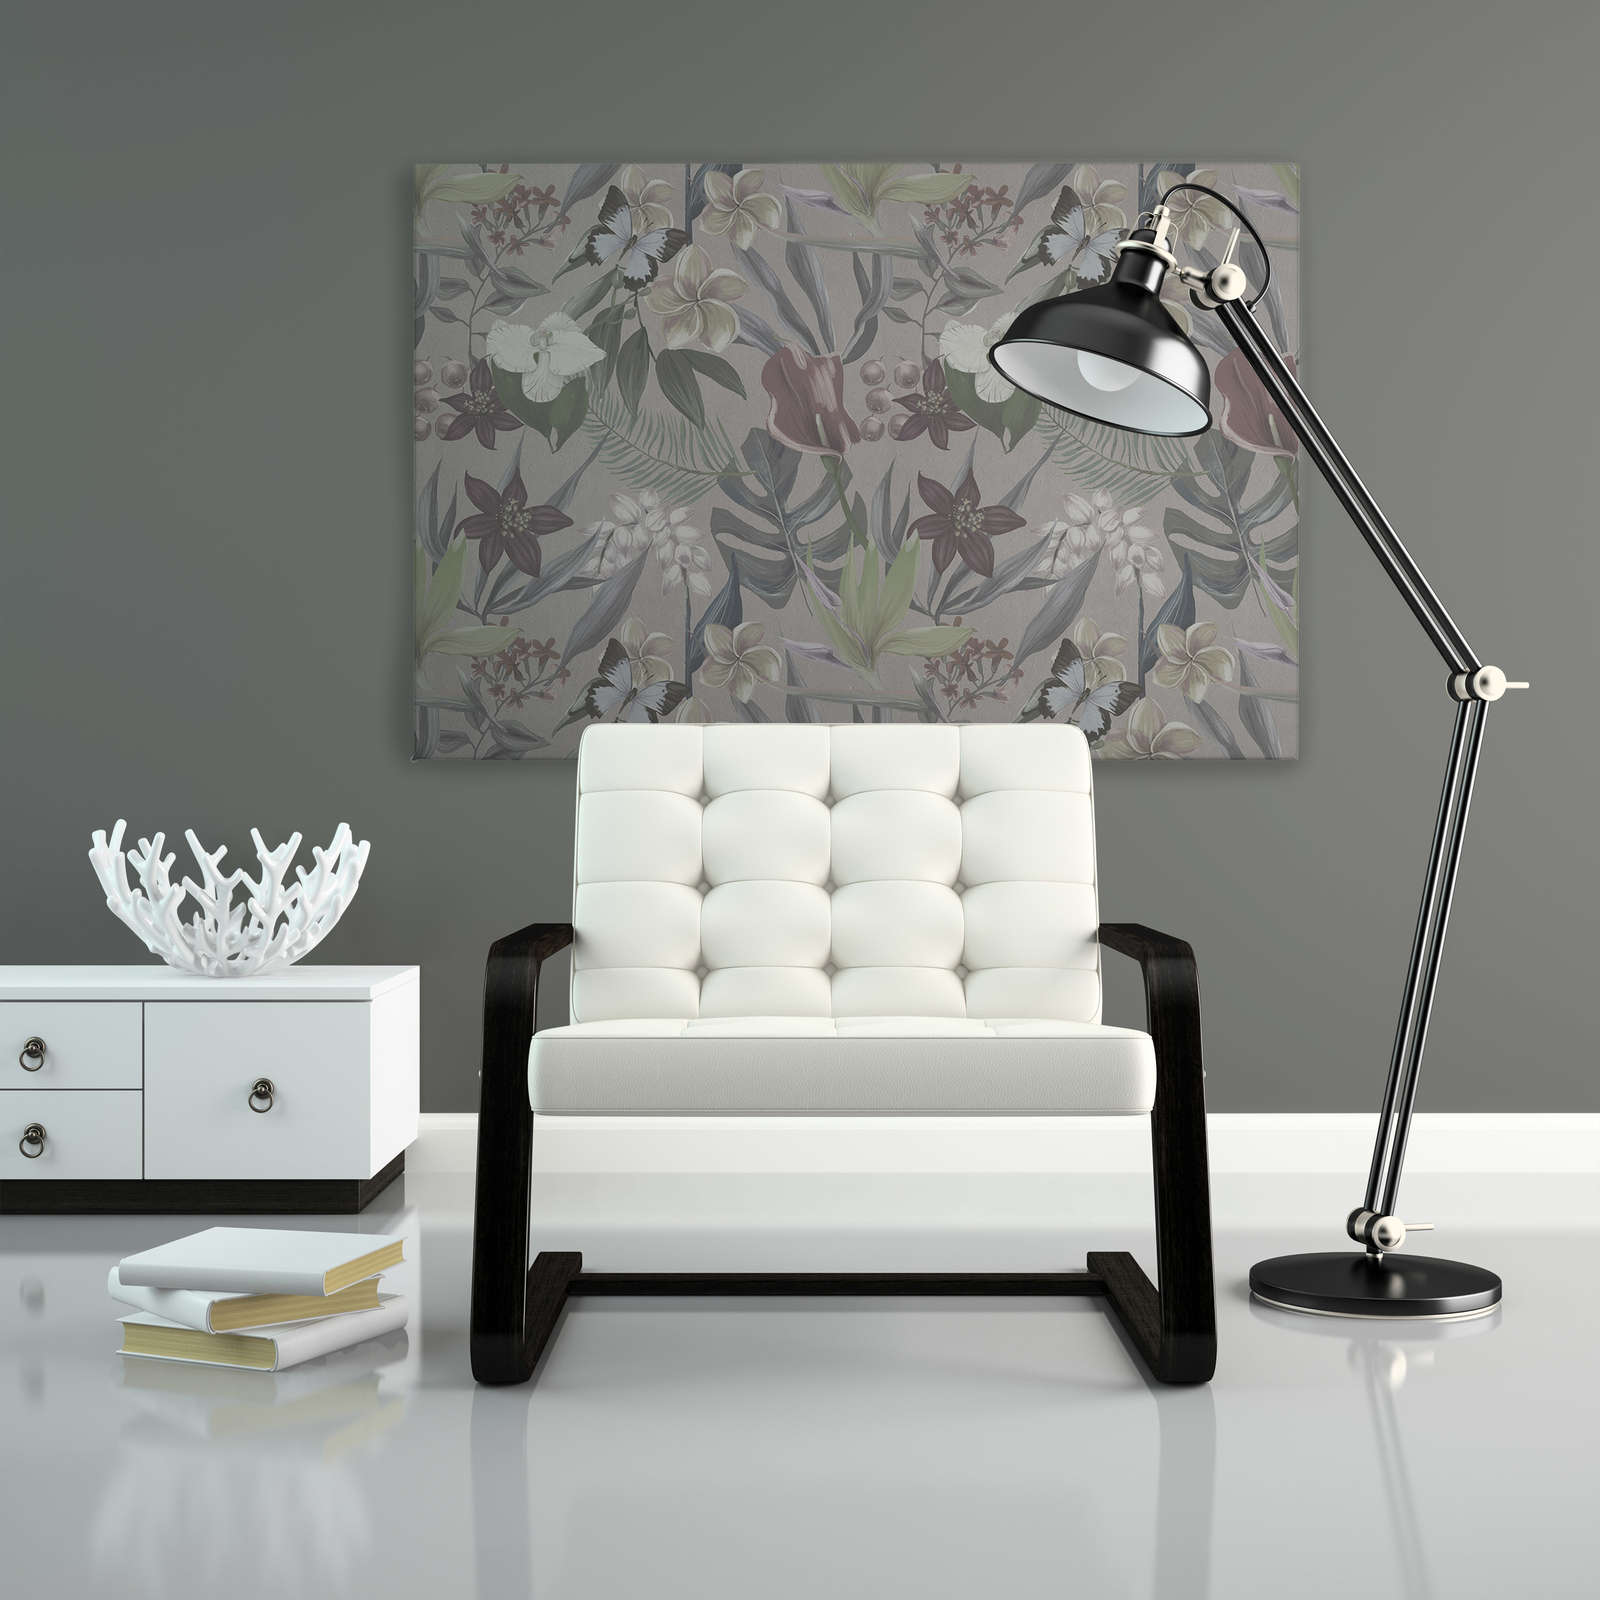             Jungla Floral Lienzo Pintura dibujada | gris, blanco - 1,20 m x 0,80 m
        